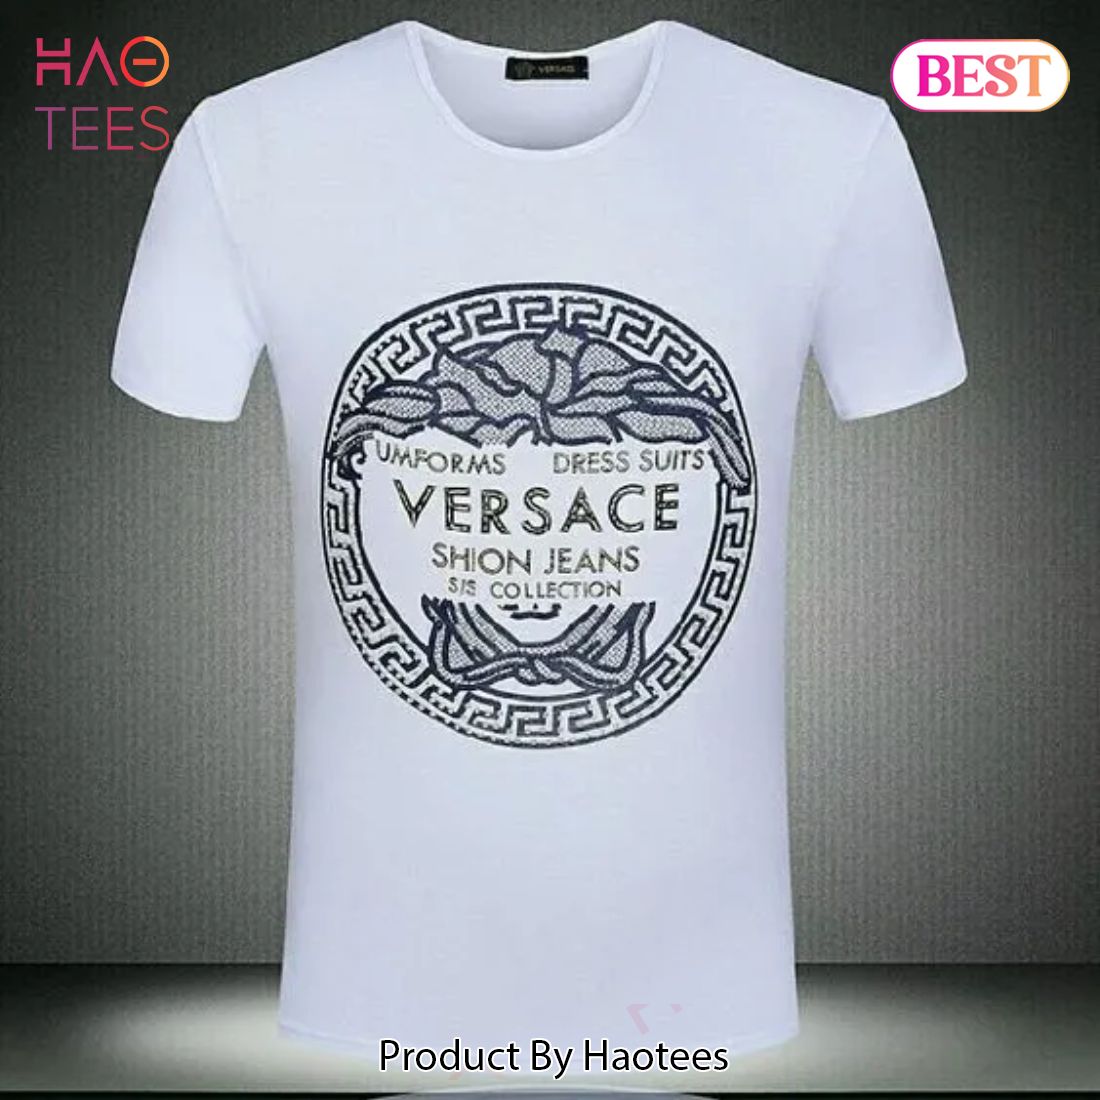 FASHION] Versace Medusa White Luxury Brand T-Shirt Outfit For Men Women